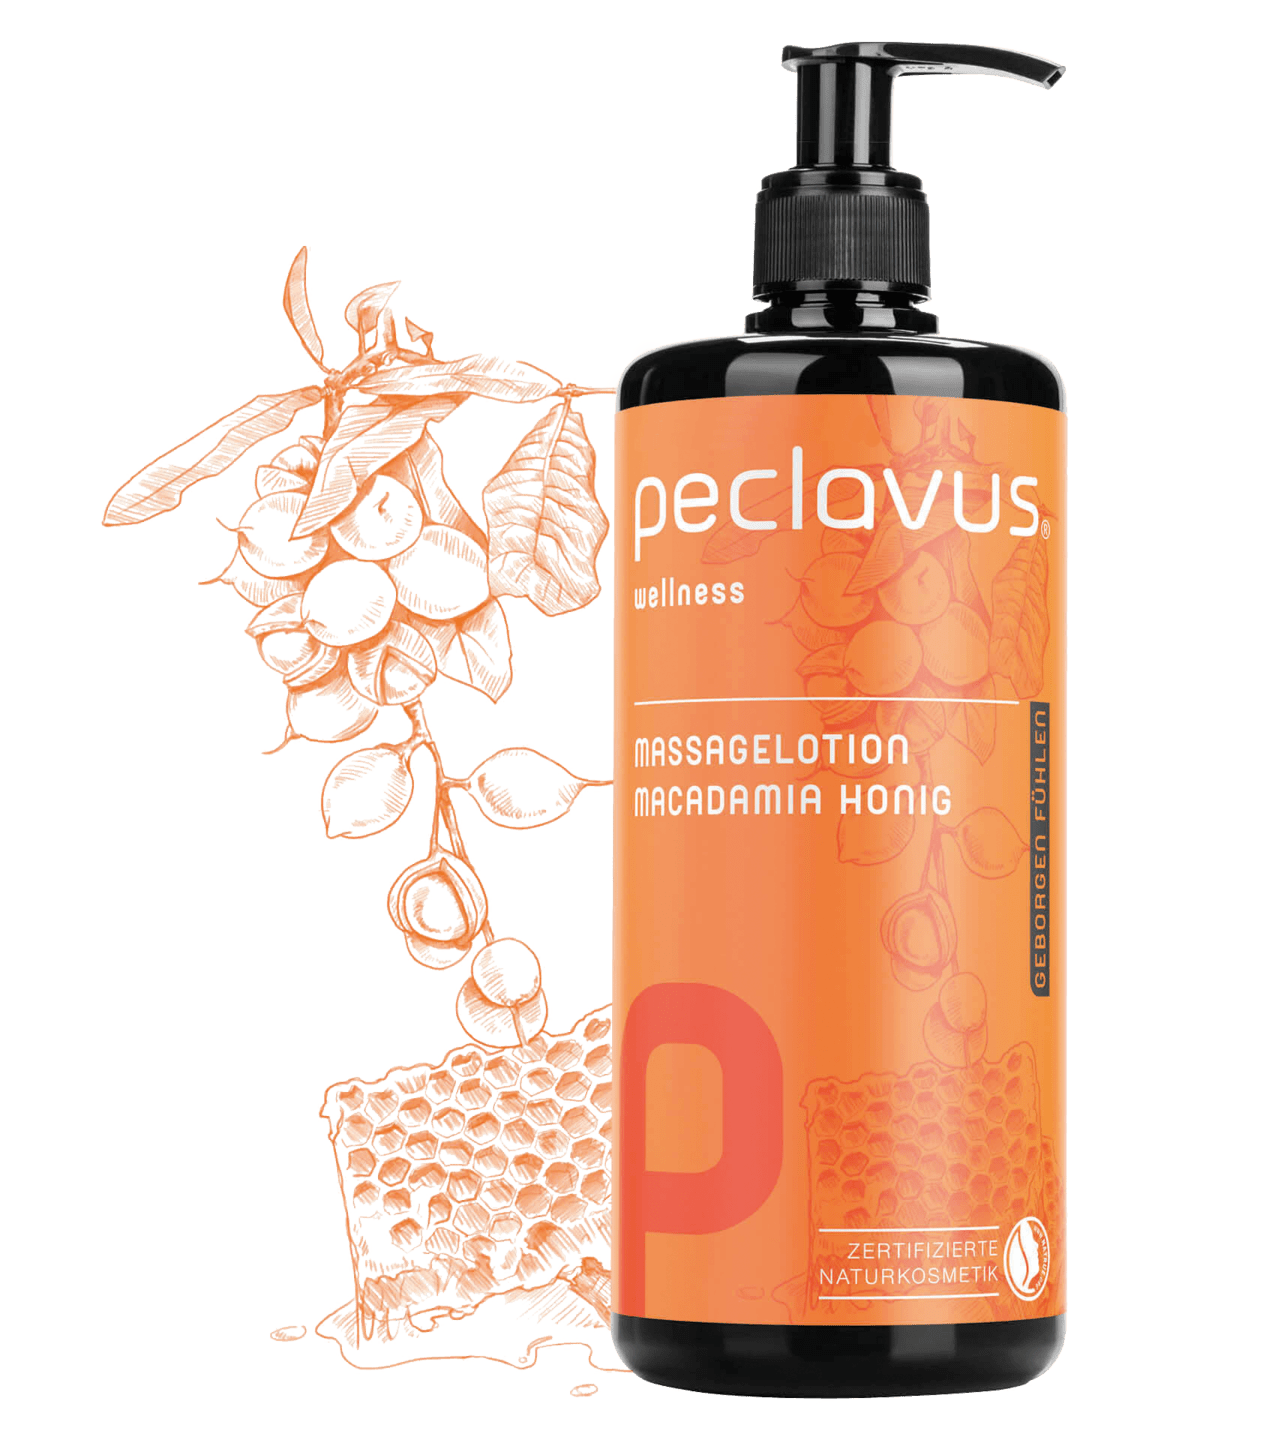 peclavus - Massagelotion Macadamia Honig, 500 ml